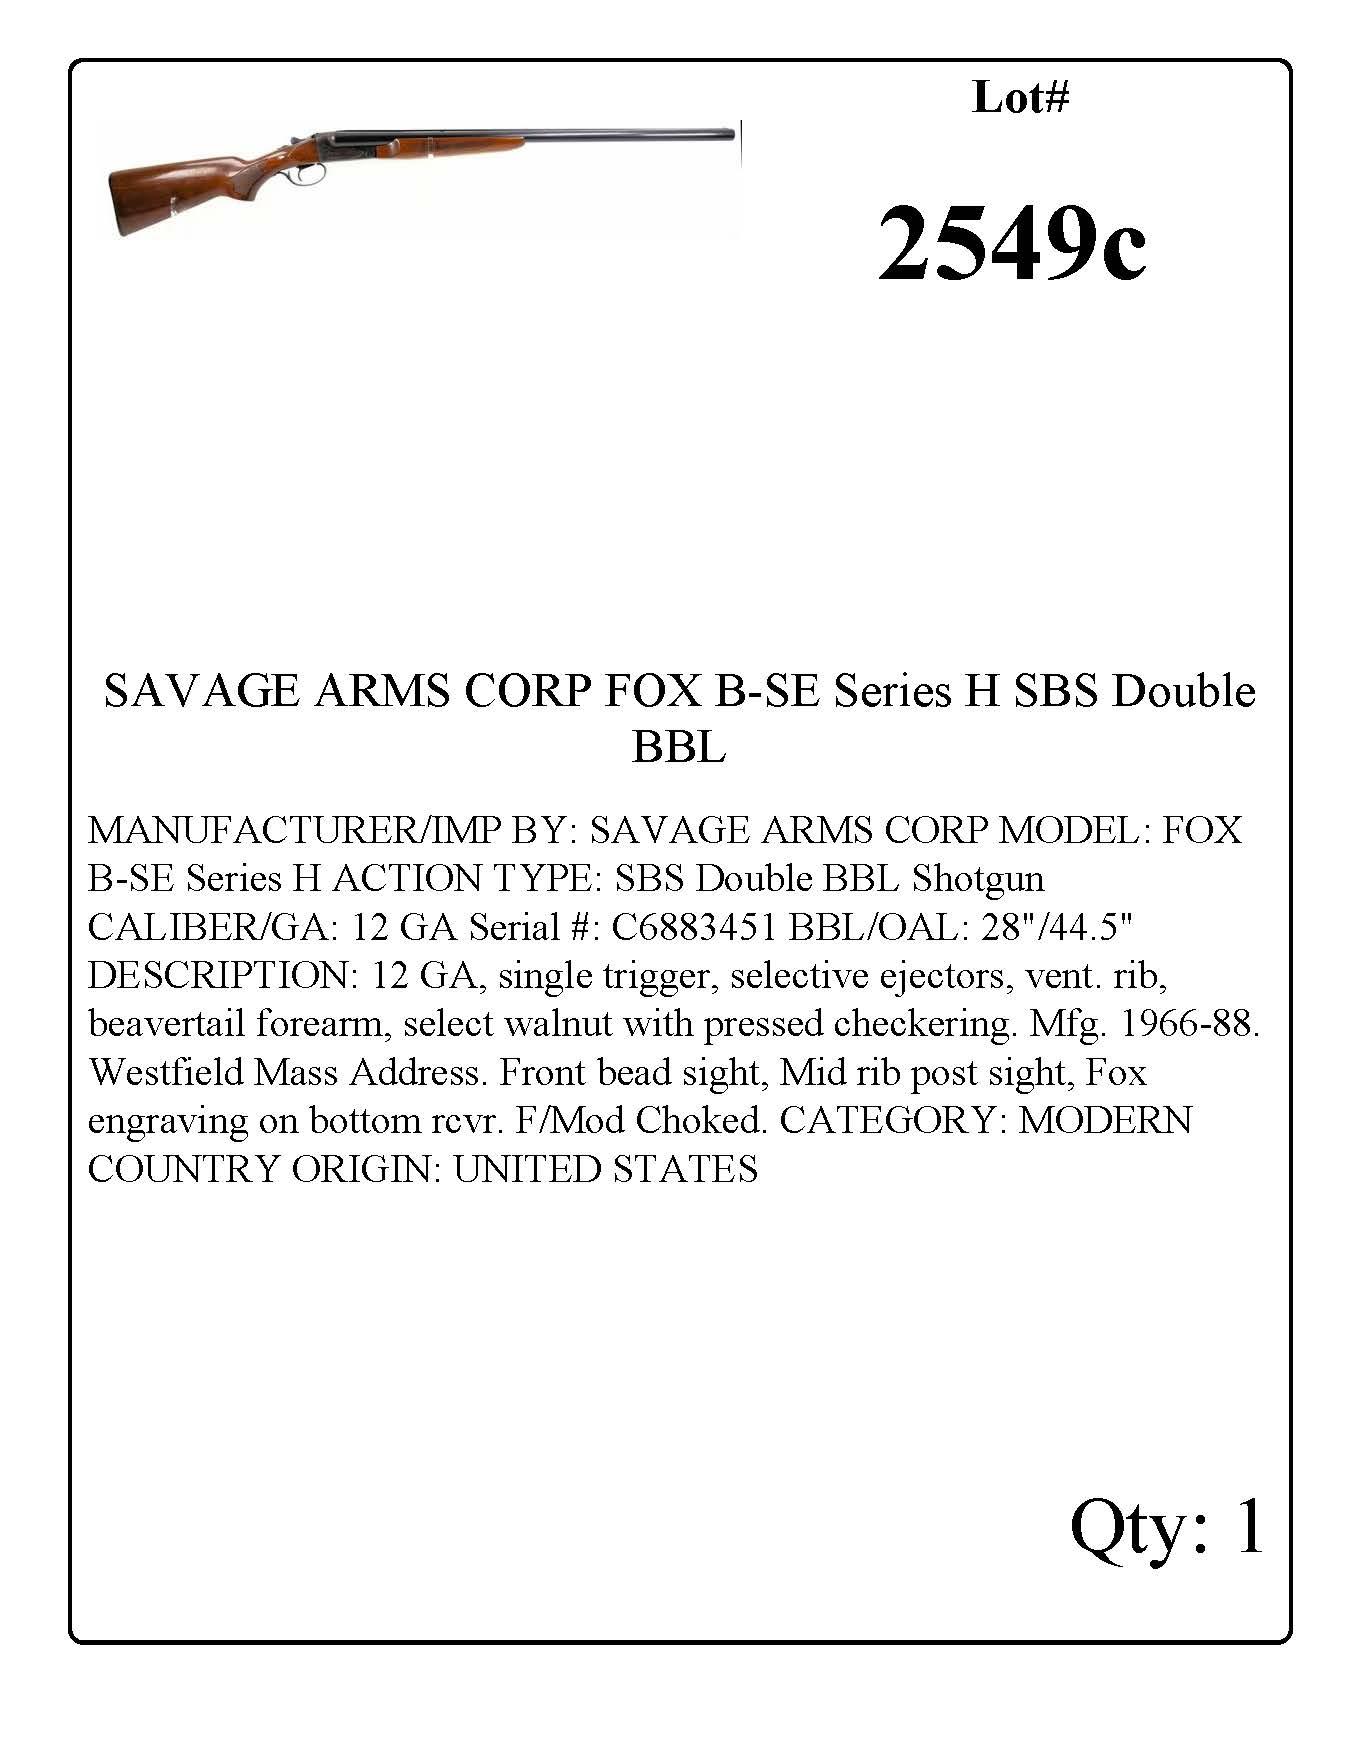 SAVAGE ARMS CORP FOX B-SE Series H SBS Double BBL 12 GA